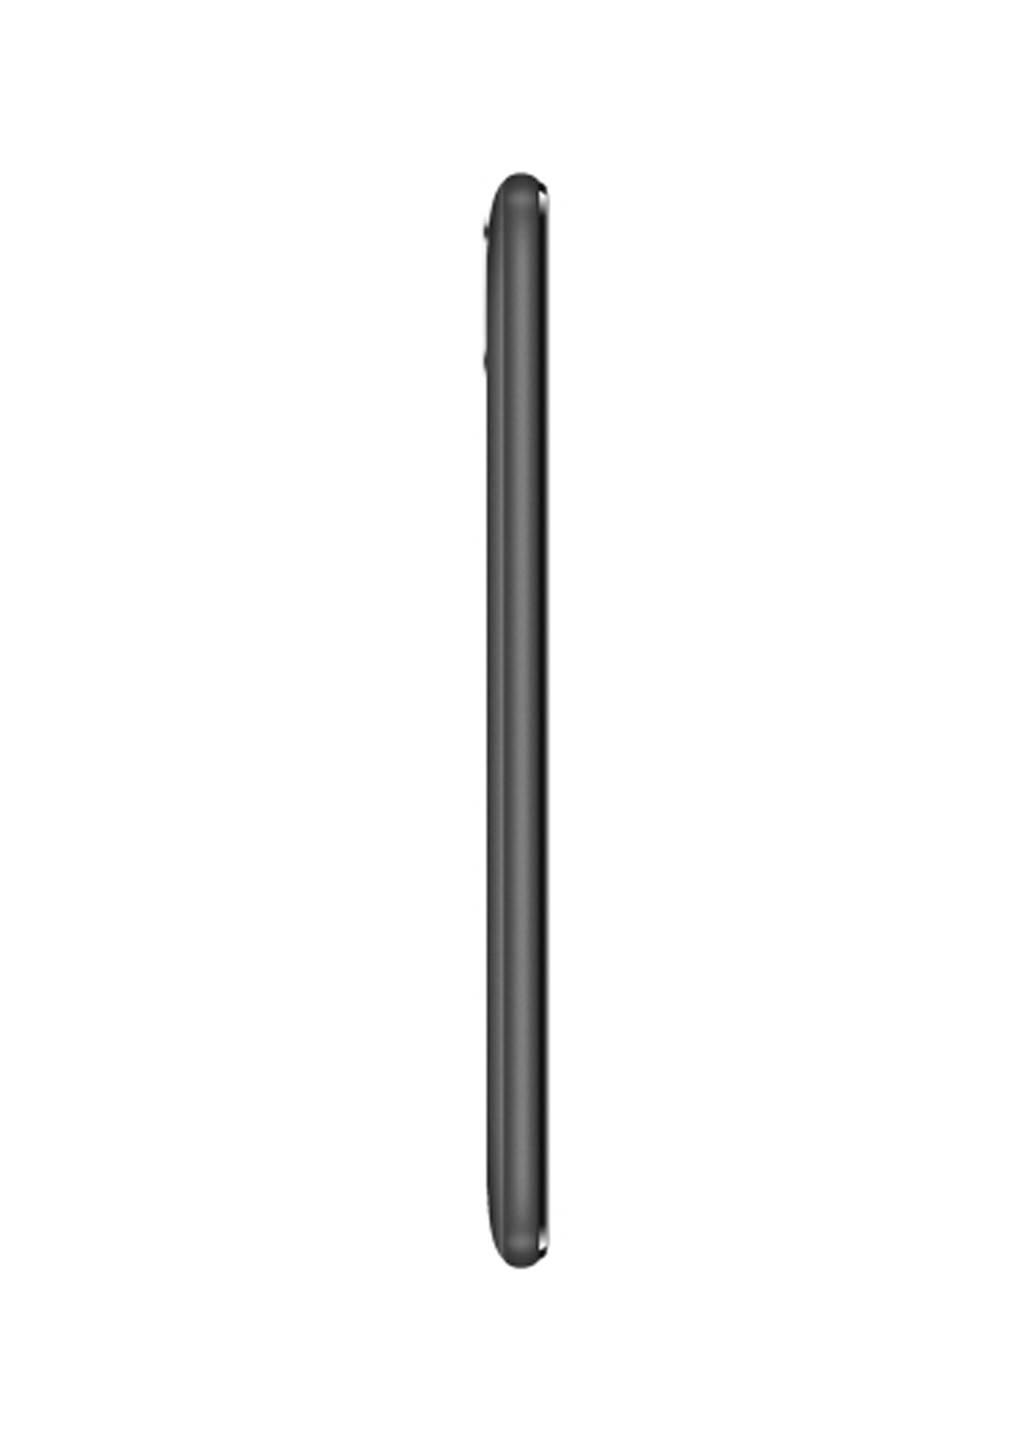 Смартфон Nomi i5710 infinity x1 1/16gb grey (133603436)